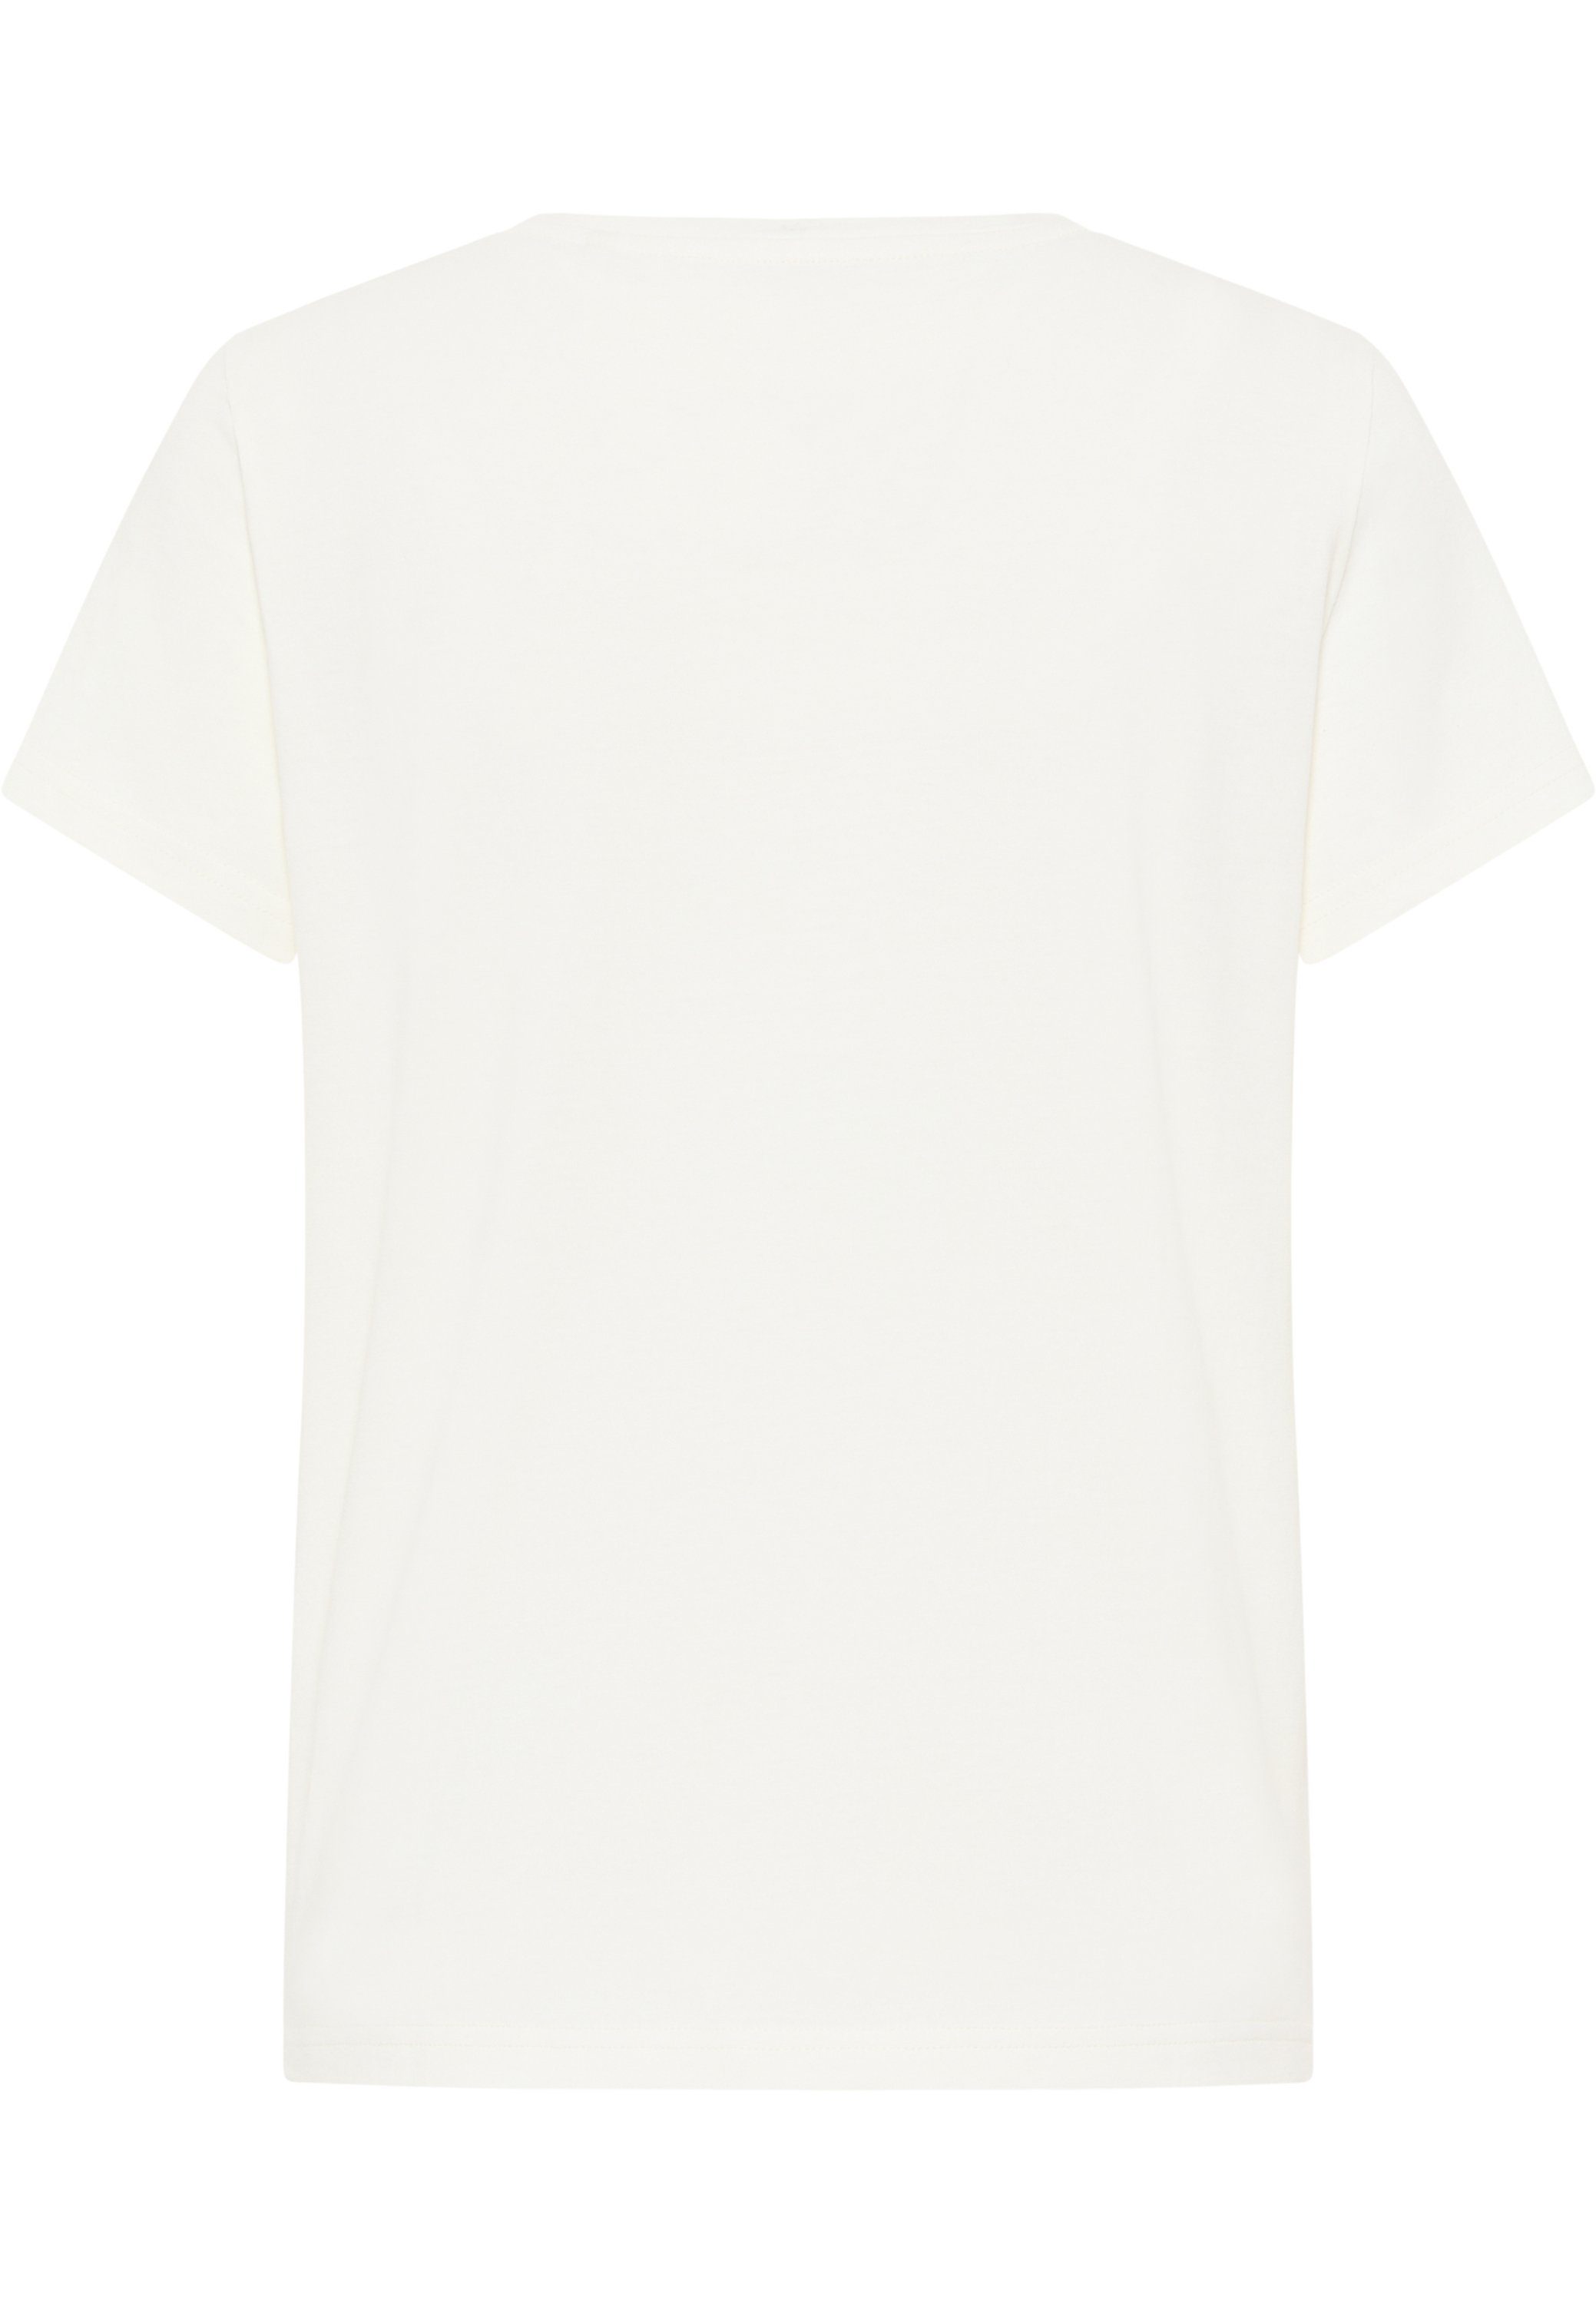 offwhite Print-Shirt MUSTANG Mustang T-Shirt Kurzarmshirt